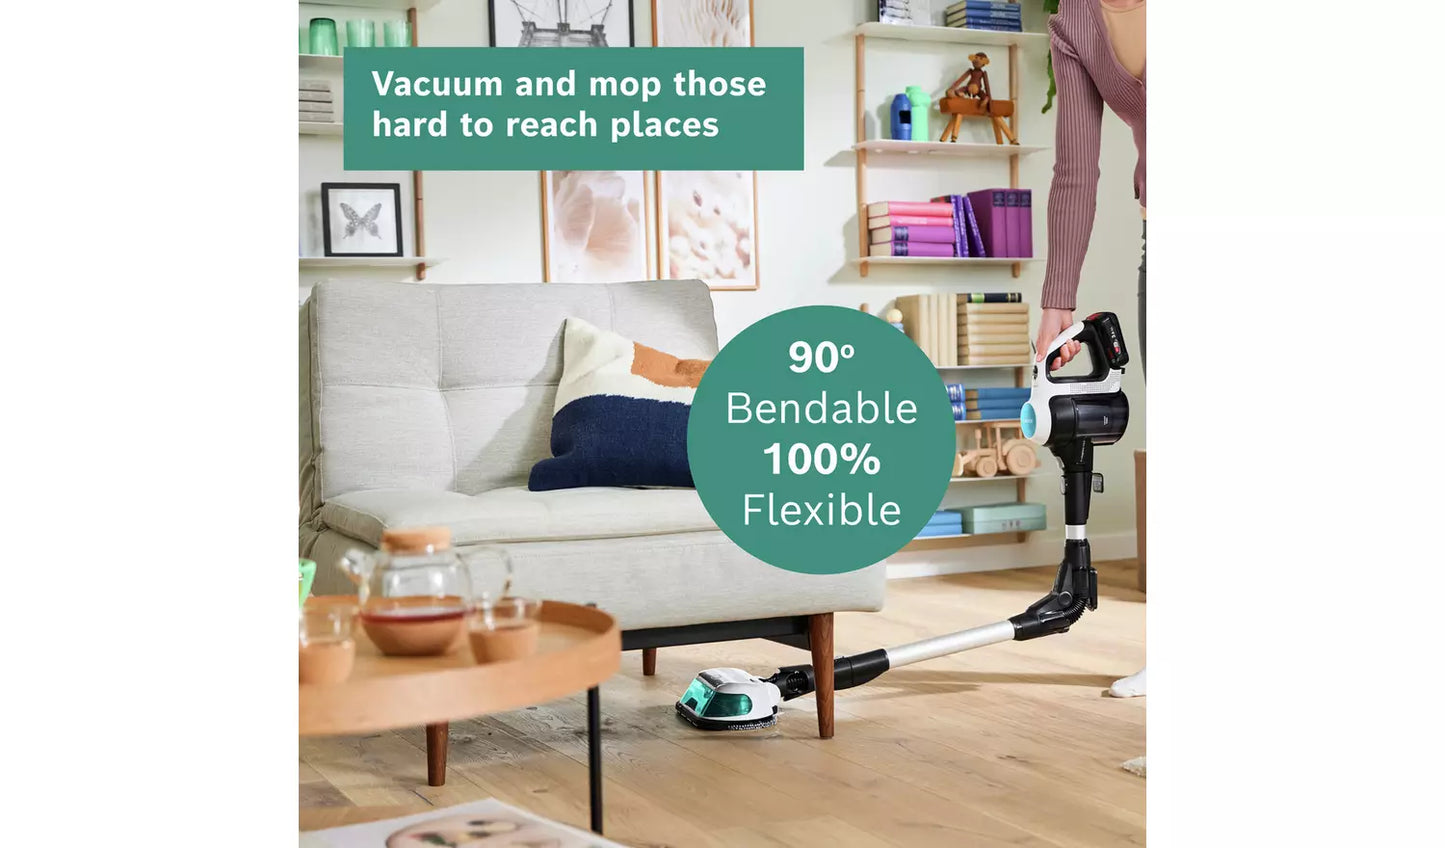 Bosch Unlimited 7 Aqua Cordless Vacuum Cleaner